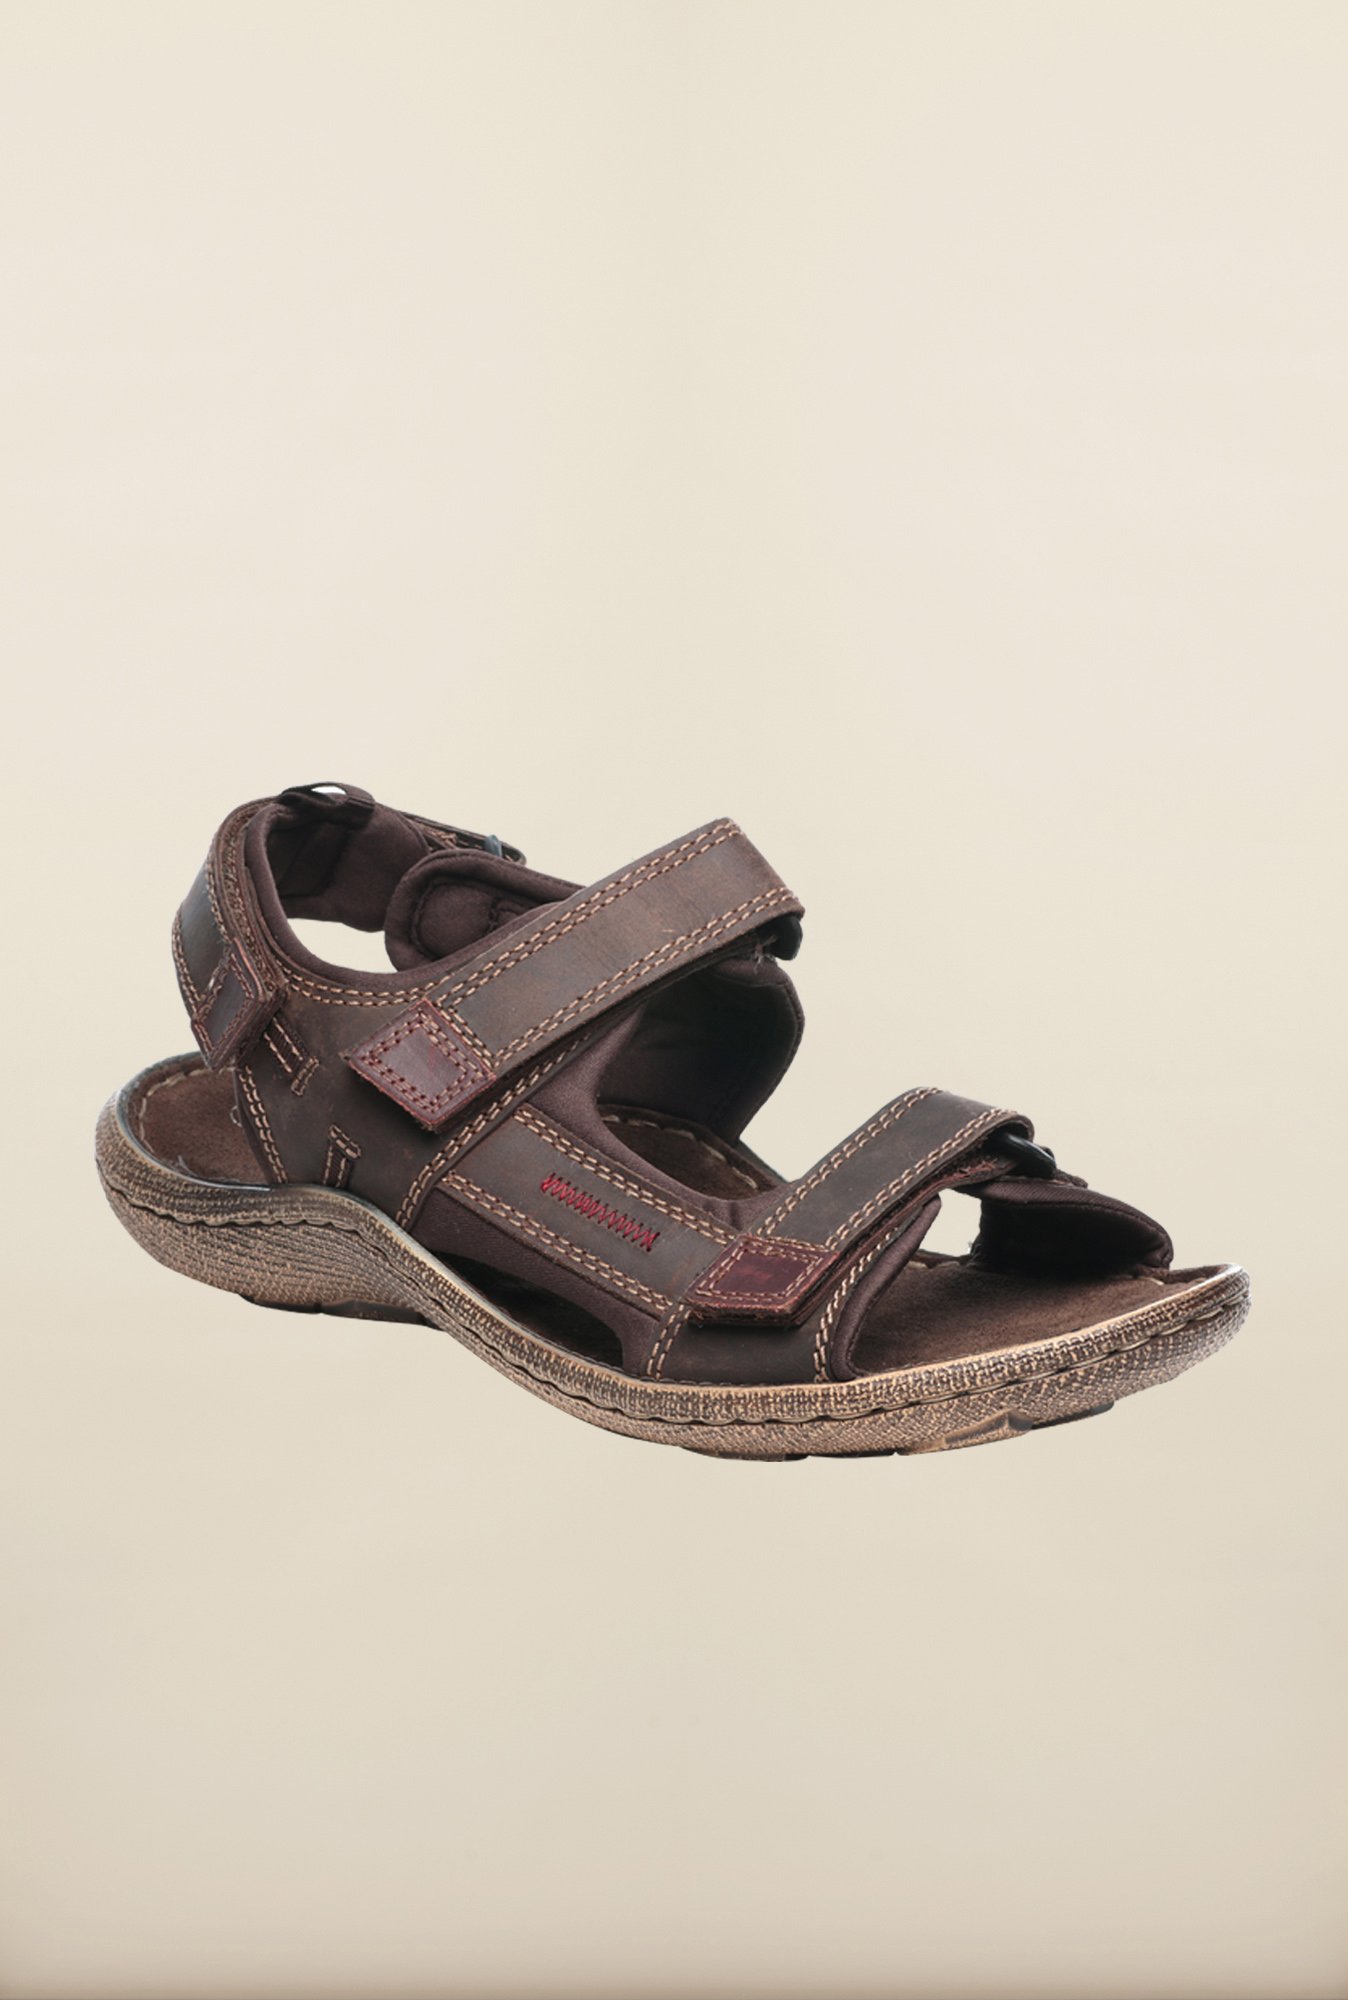 Pavers England Mens Brown Leather Sandals  6 UK  Amazonin Fashion